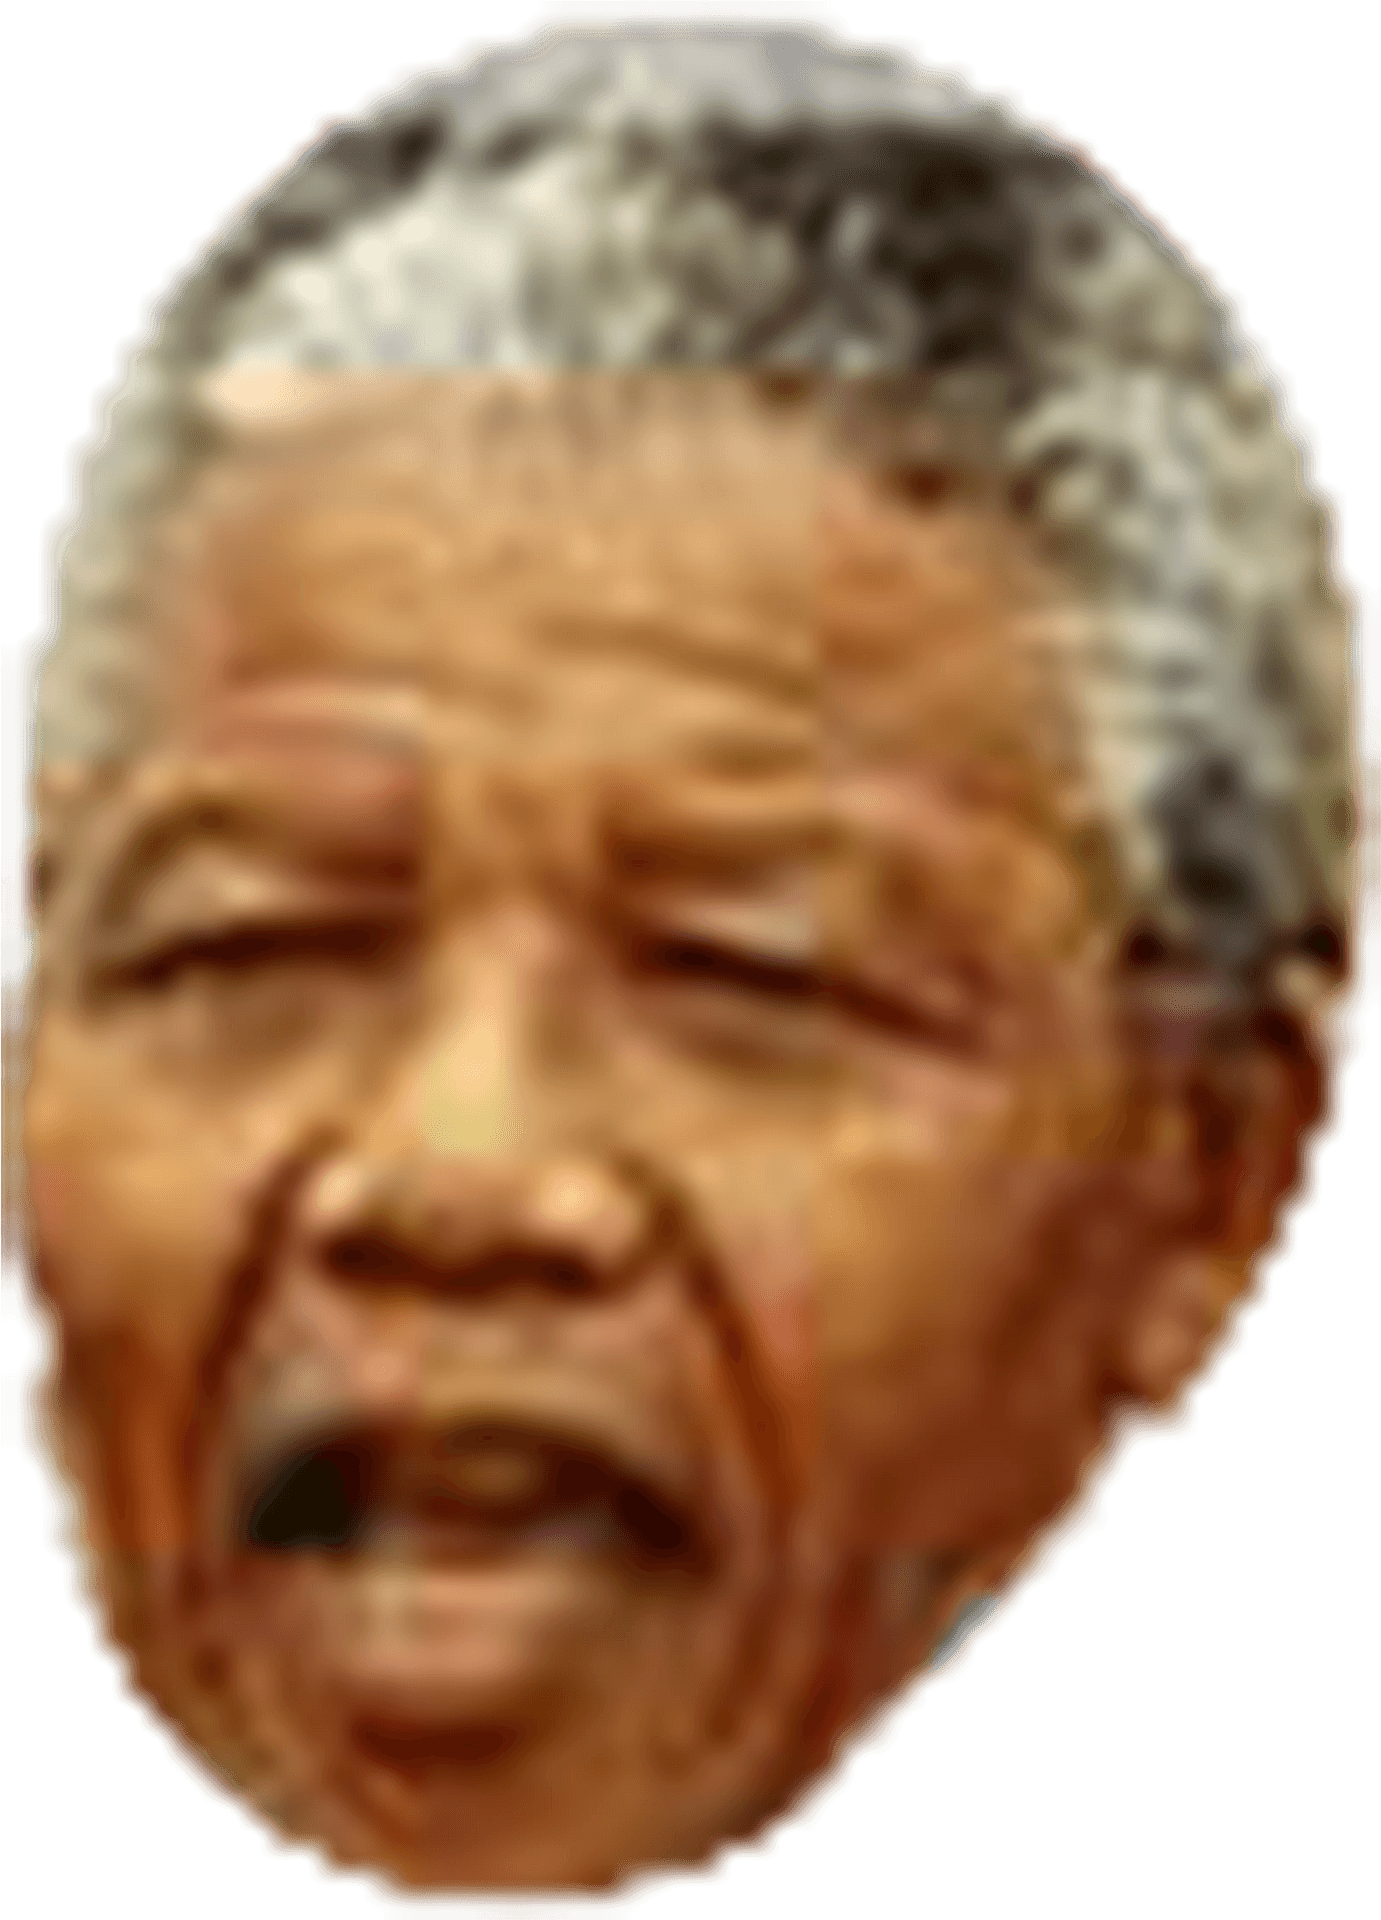 Nelson Mandela Portrait PNG